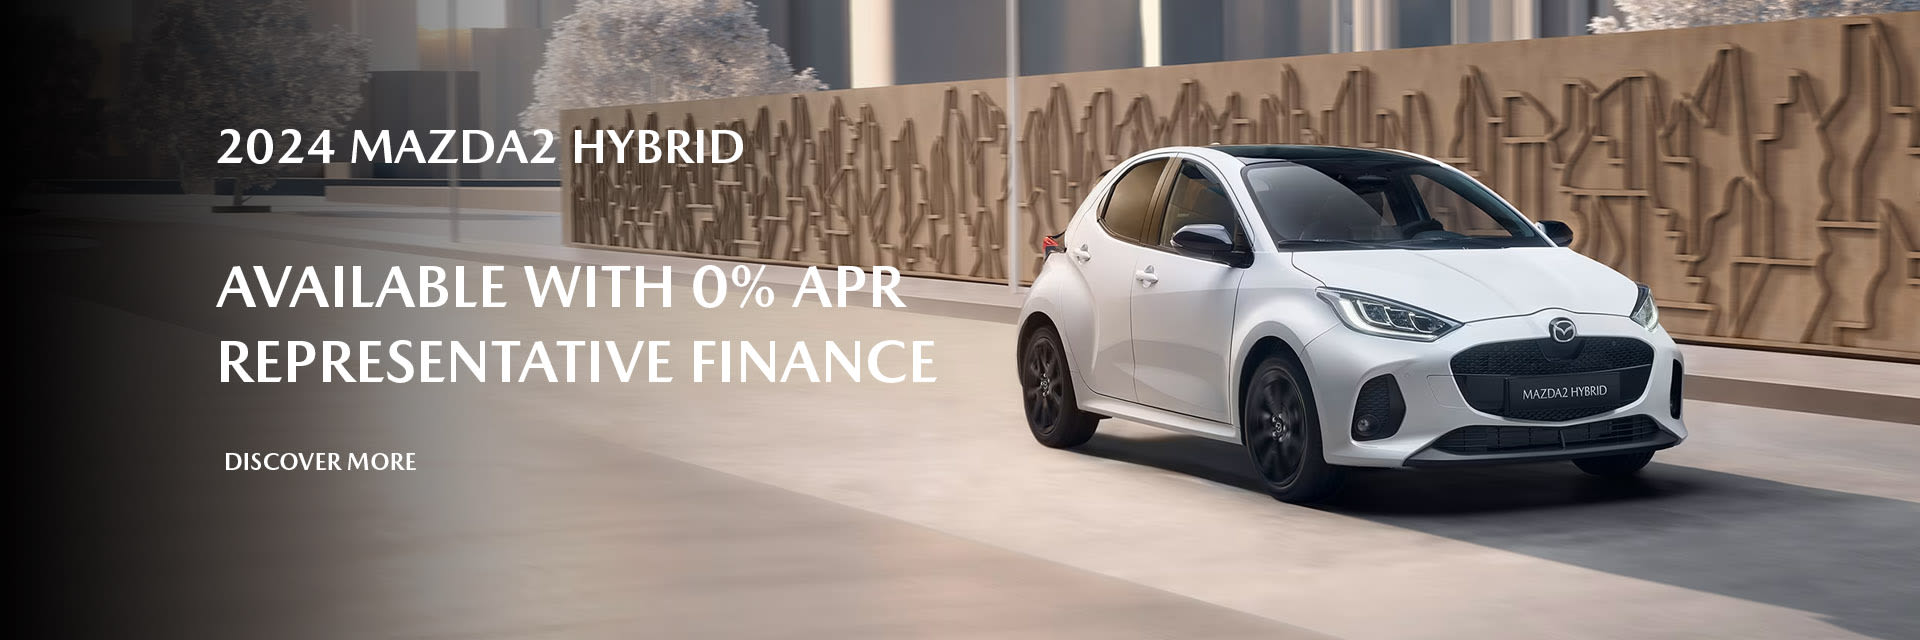 Mazda 2 Hybrid 0% APR Offer